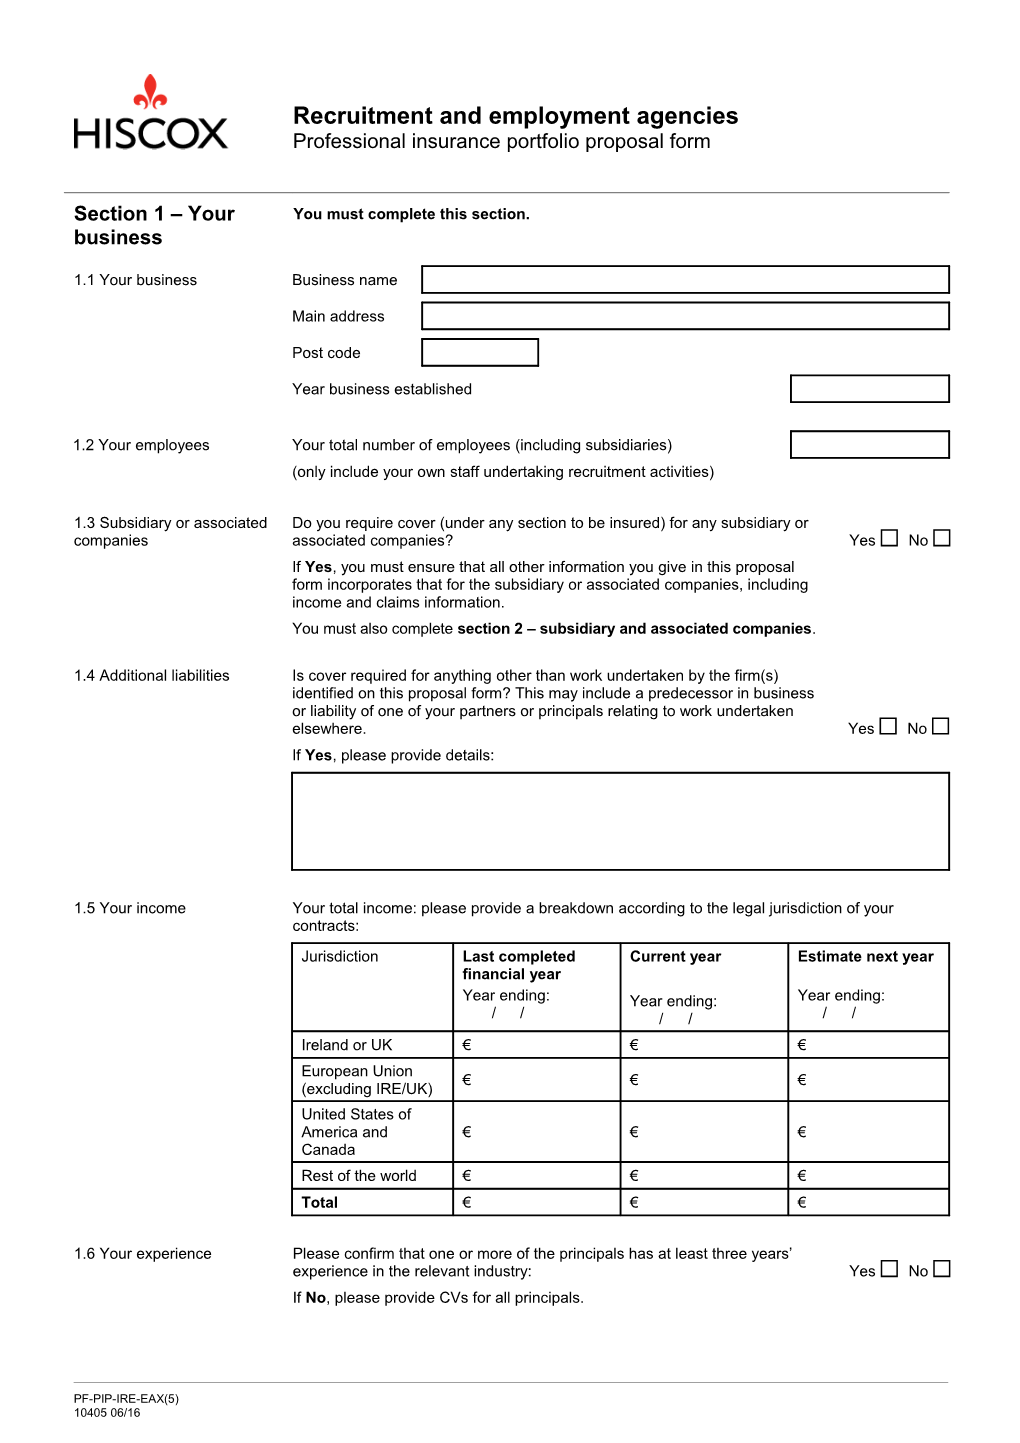 Recruitment Consultants - Proposal Form (Ireland)